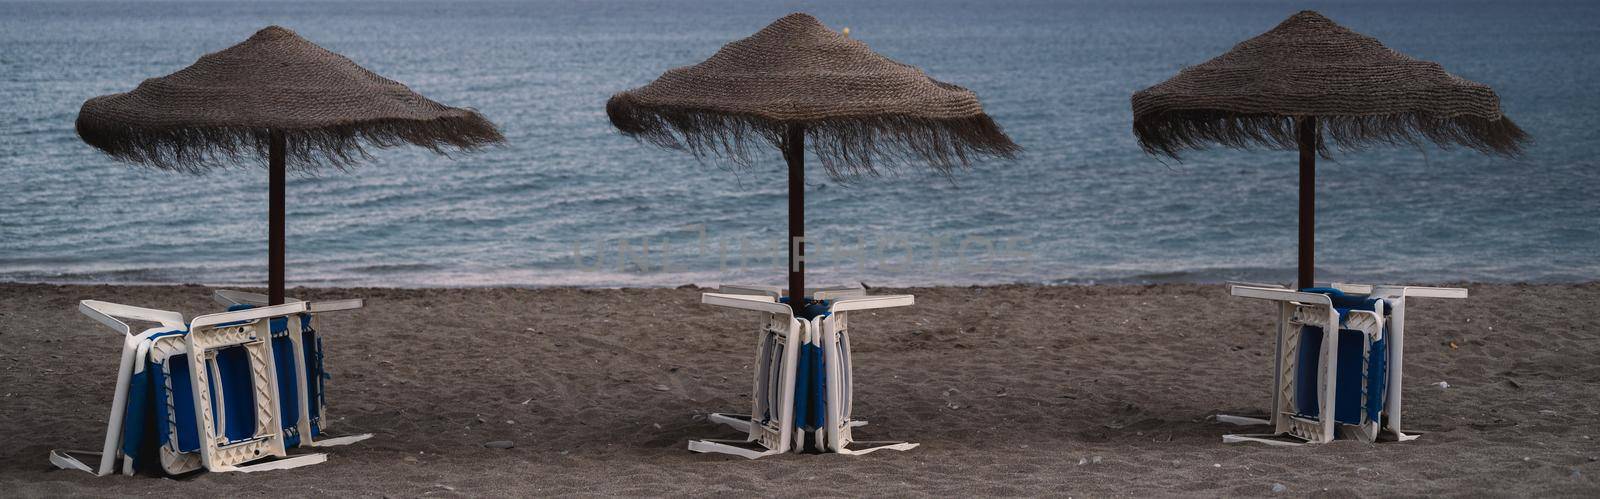 Hammocks and beach umbrellas by asolano